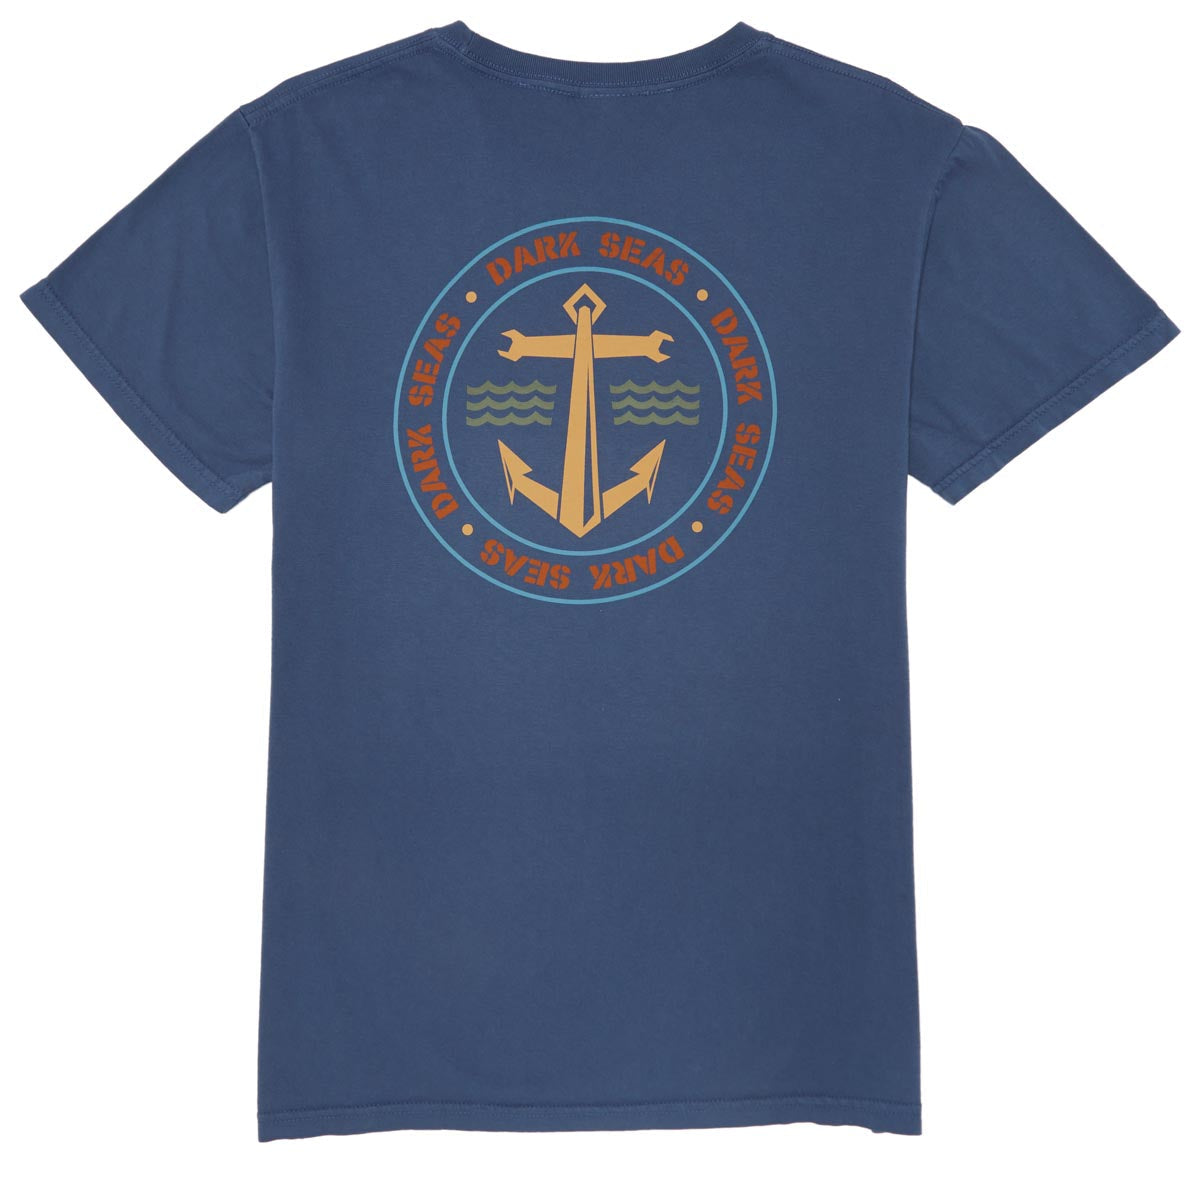 Dark Seas Offshore T-Shirt - Slate image 1